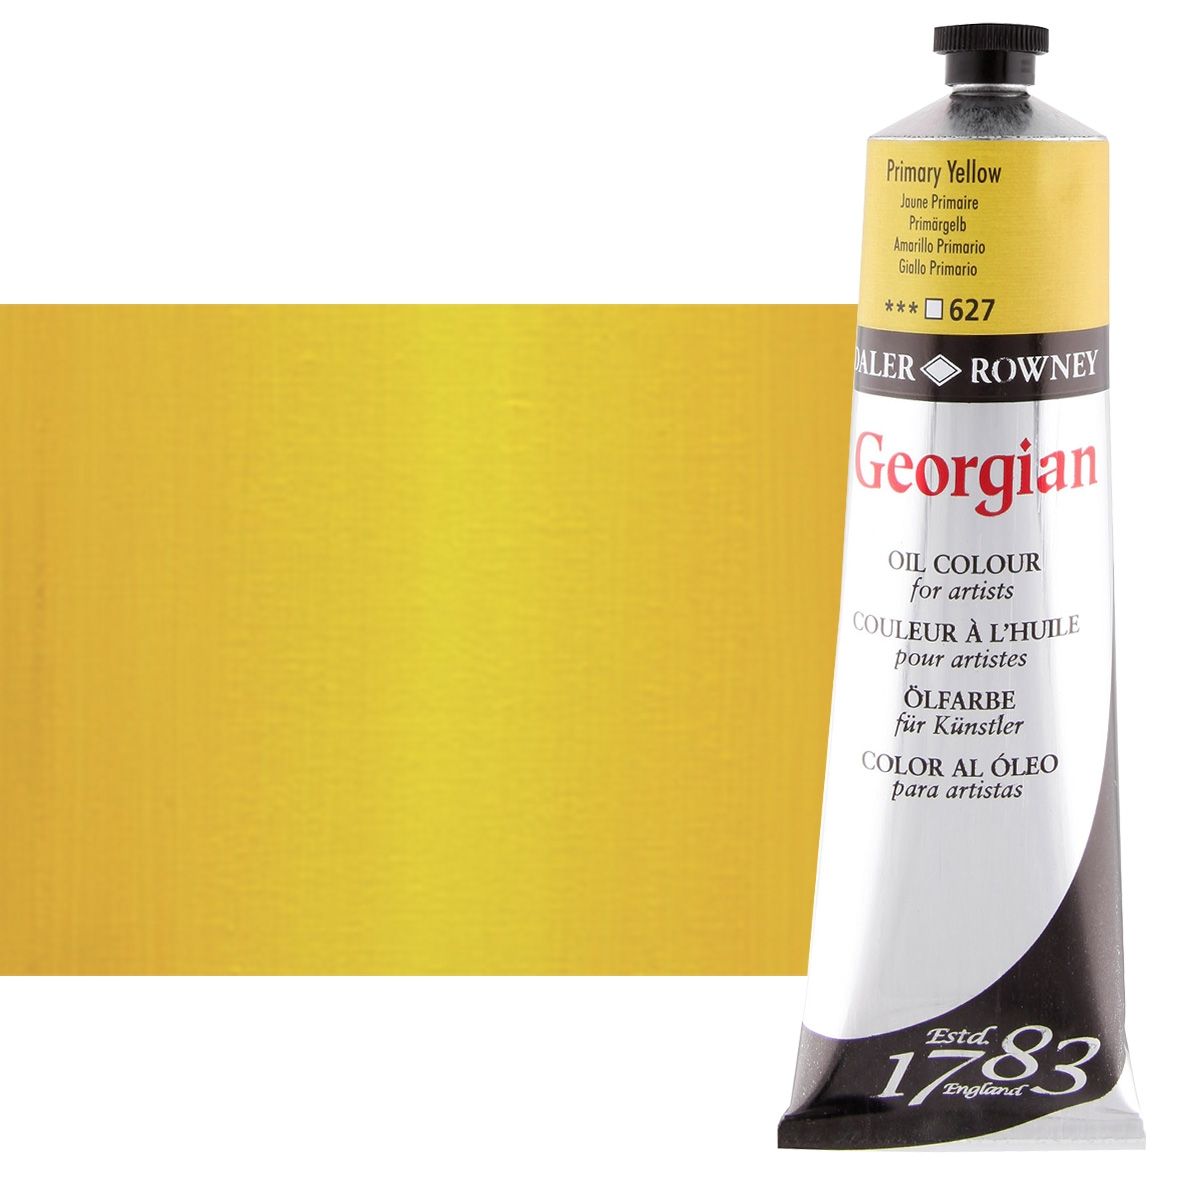 Daler-Rowney Georgian Oil Color 225ml Tube - Primary Yellow